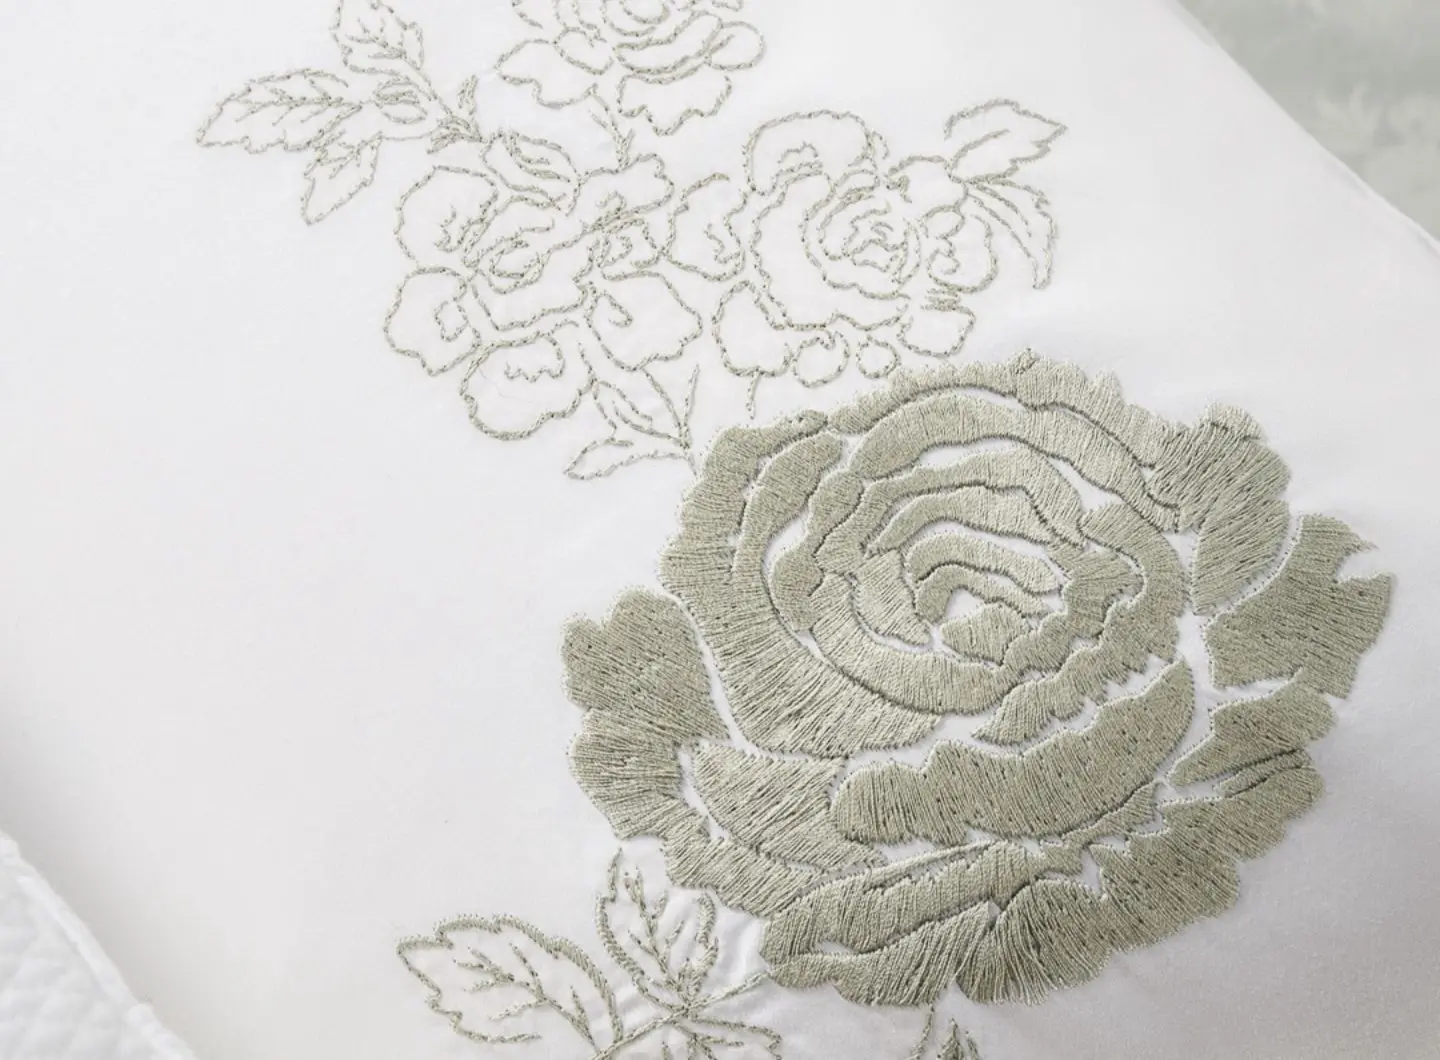 ROSETO three-dimensional embroidery